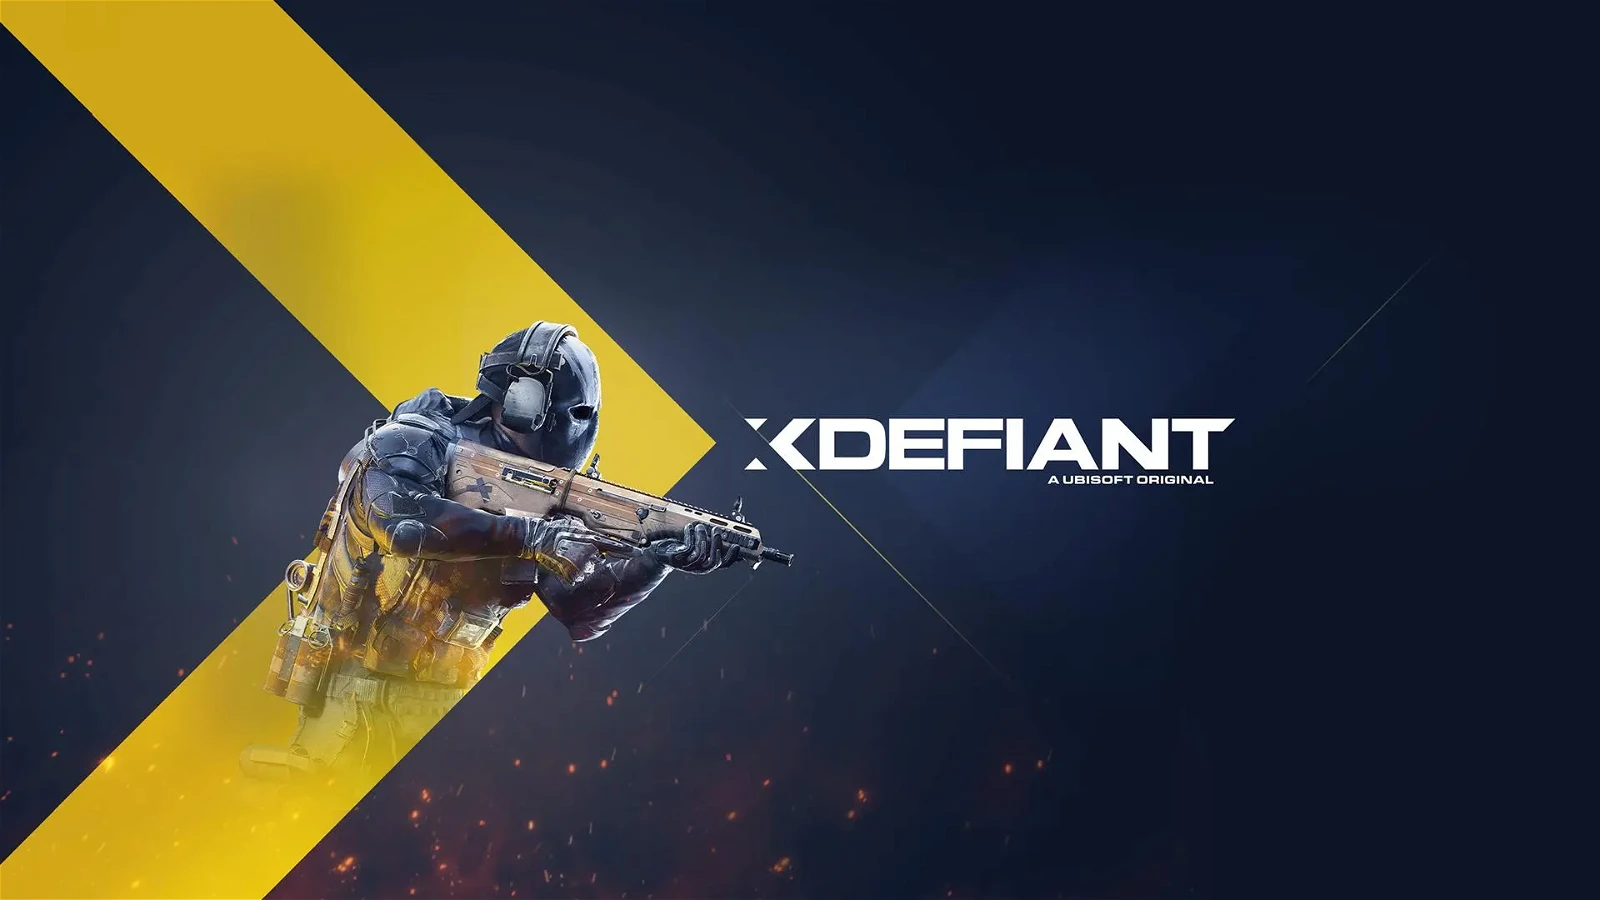 XDefiant (via Ubisoft)